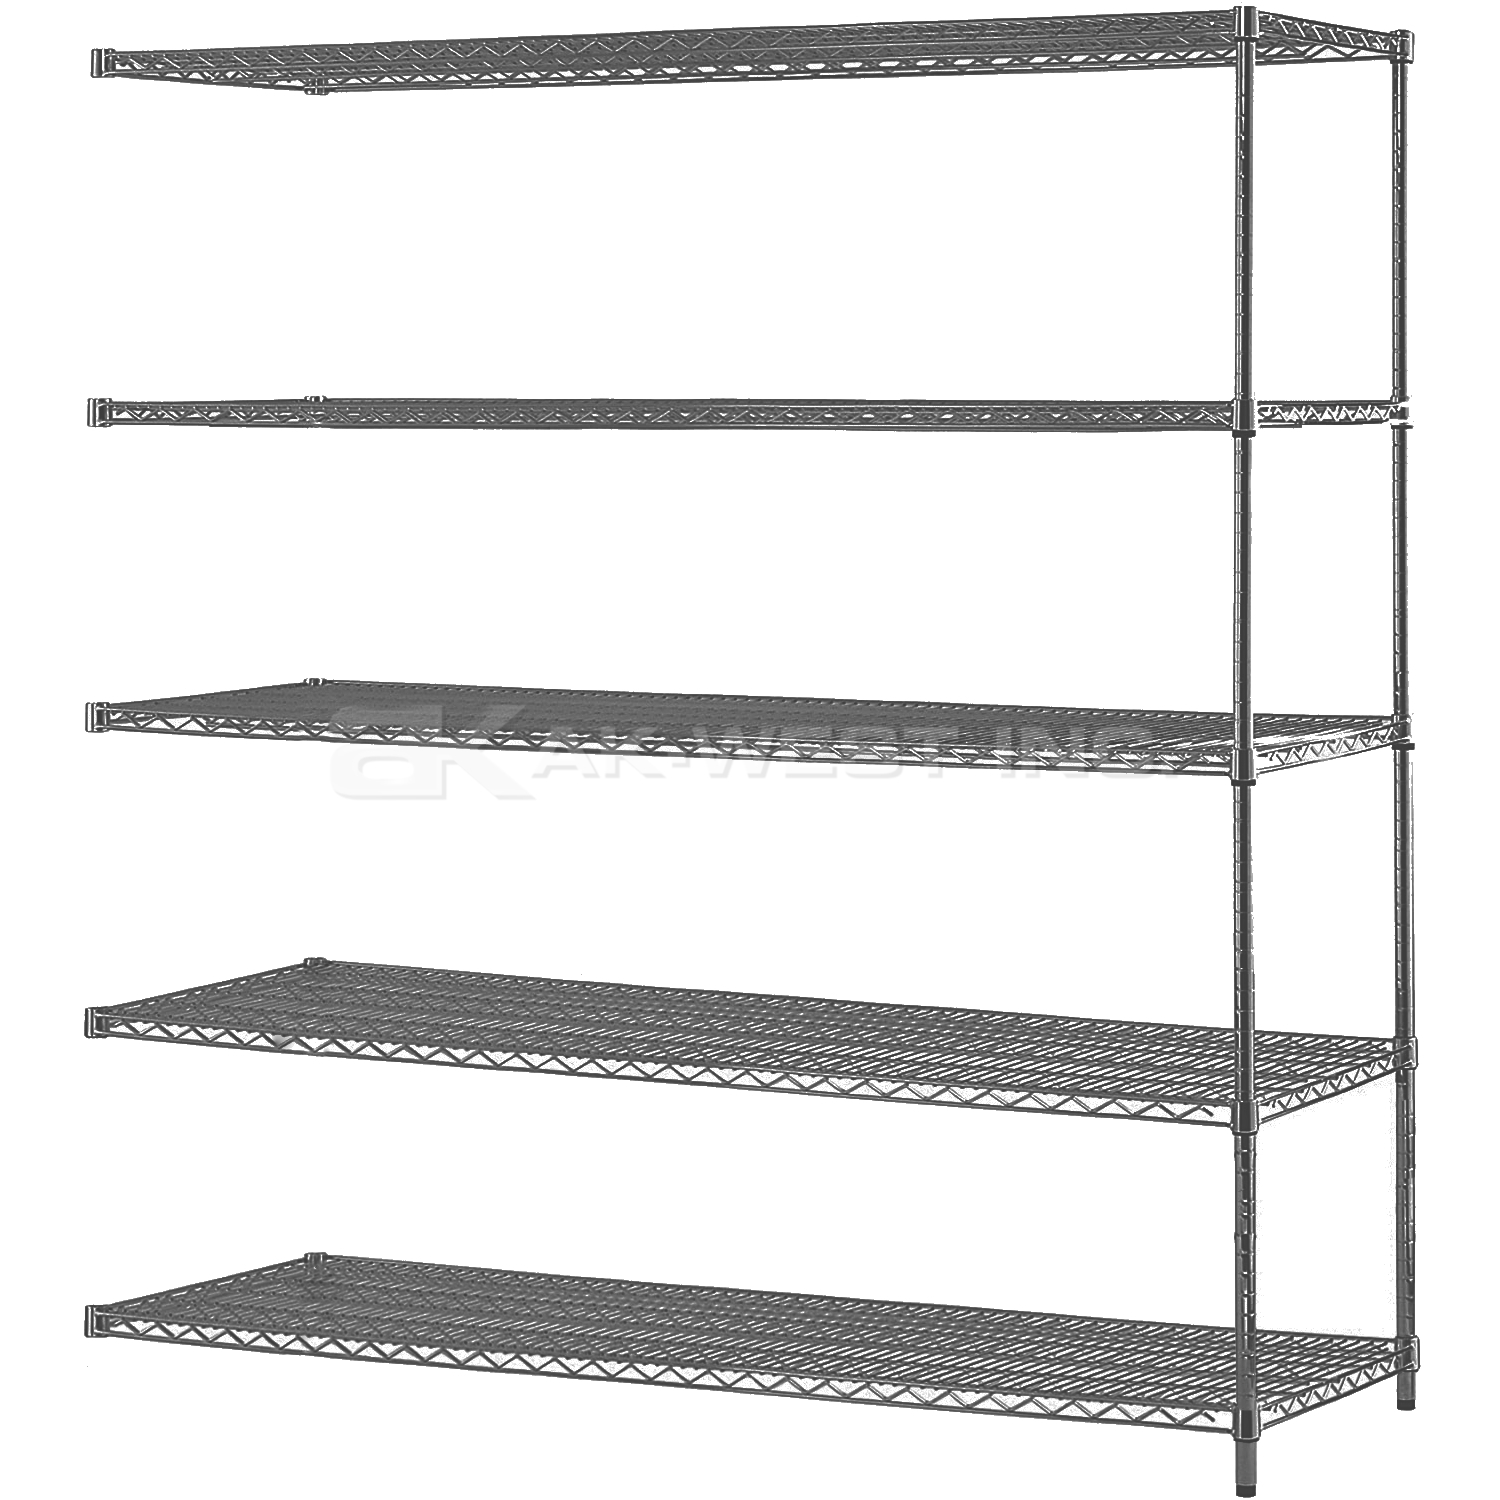 Grey, 18"D x 72"W x 96"H, 6 Shelf, Wire Shelving Adder Kit